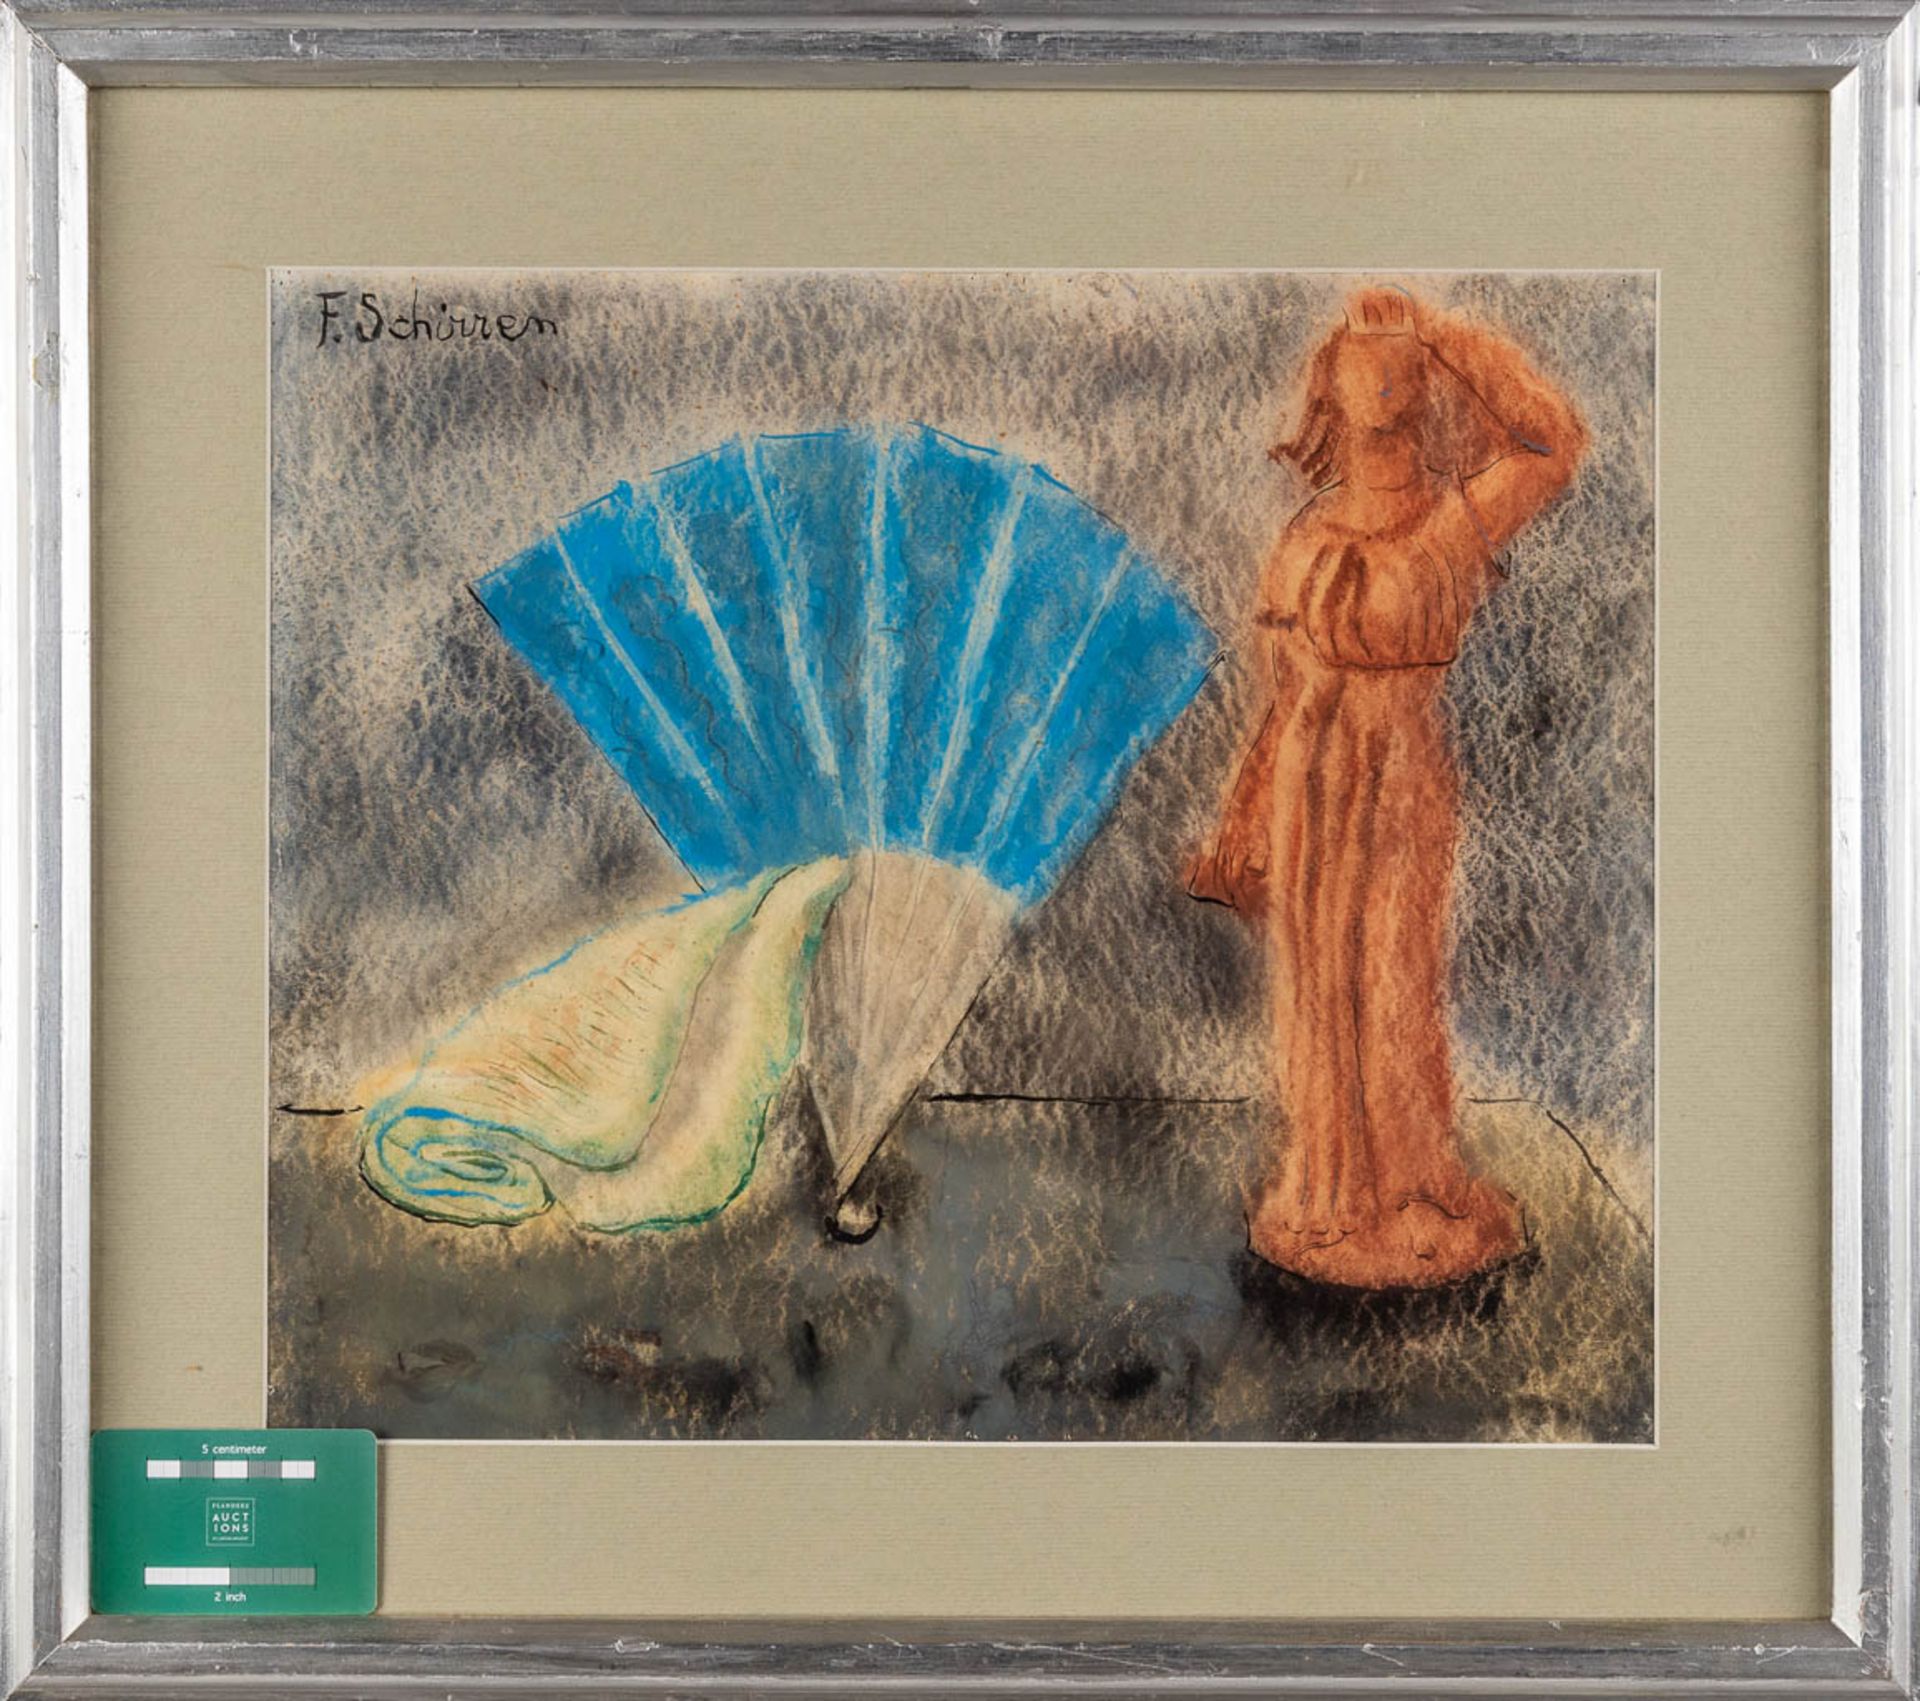 Ferdinand SCHIRREN (1872-1944) 'Still life with a fan' watercolour on paper. (W:41 x H:35 cm) - Image 2 of 7